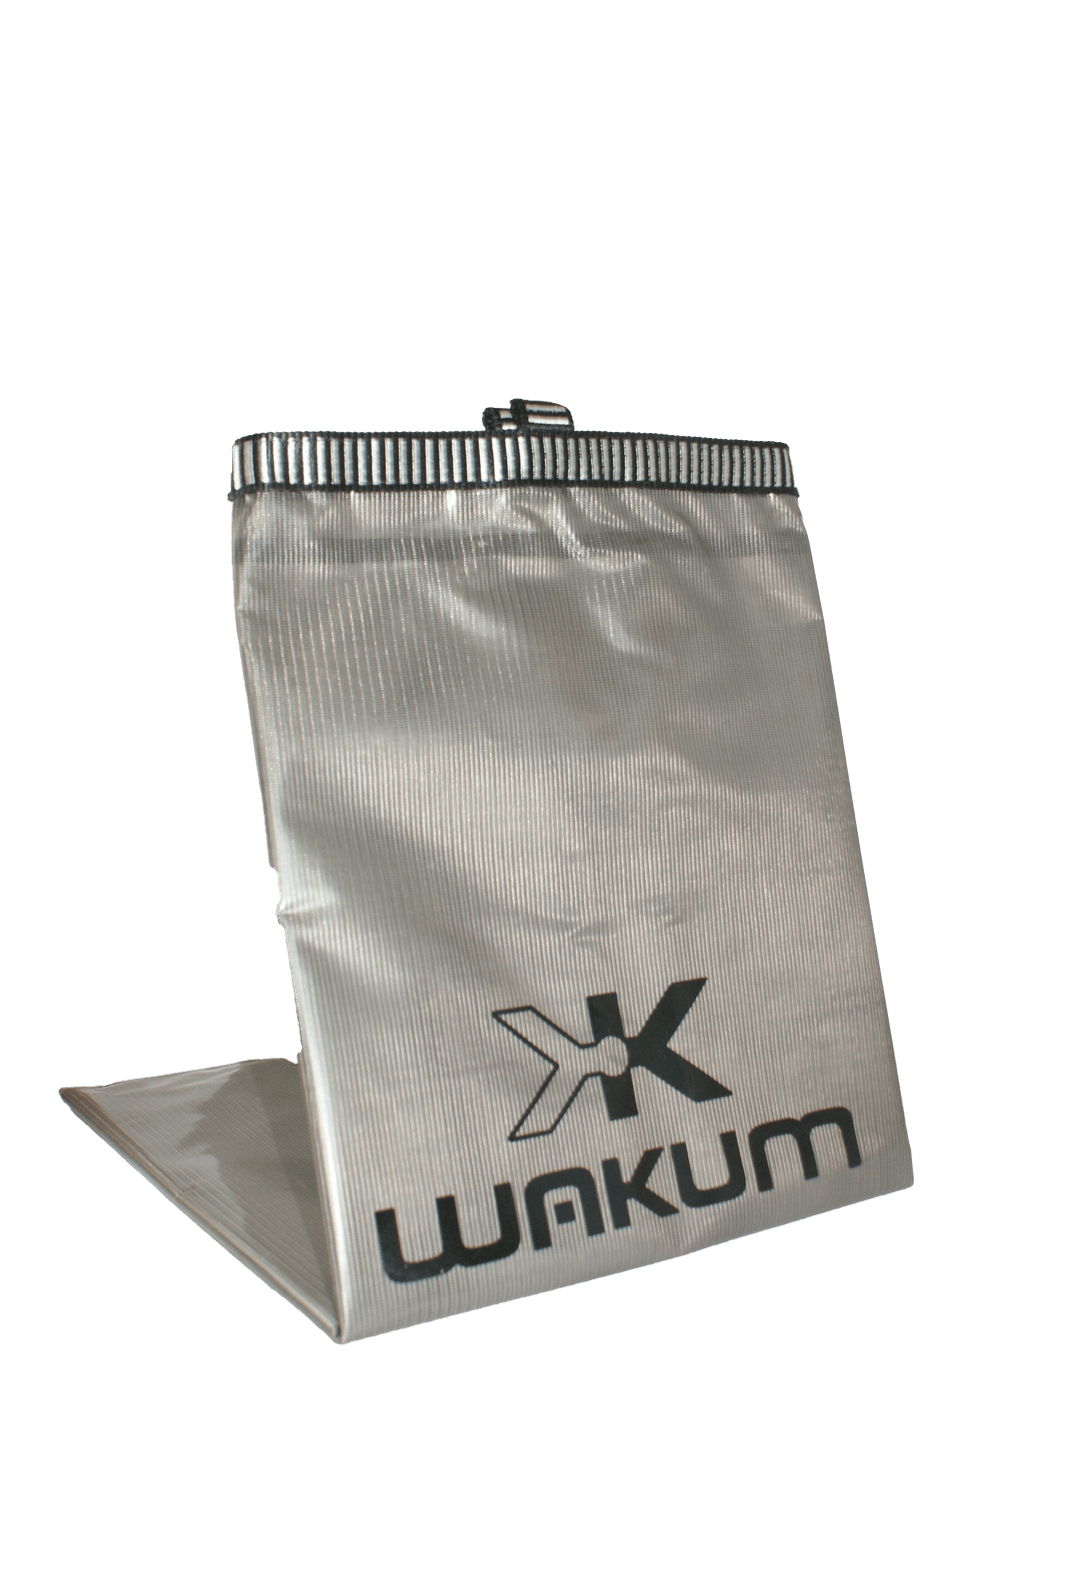 Wakum wet bag - Orca Sports